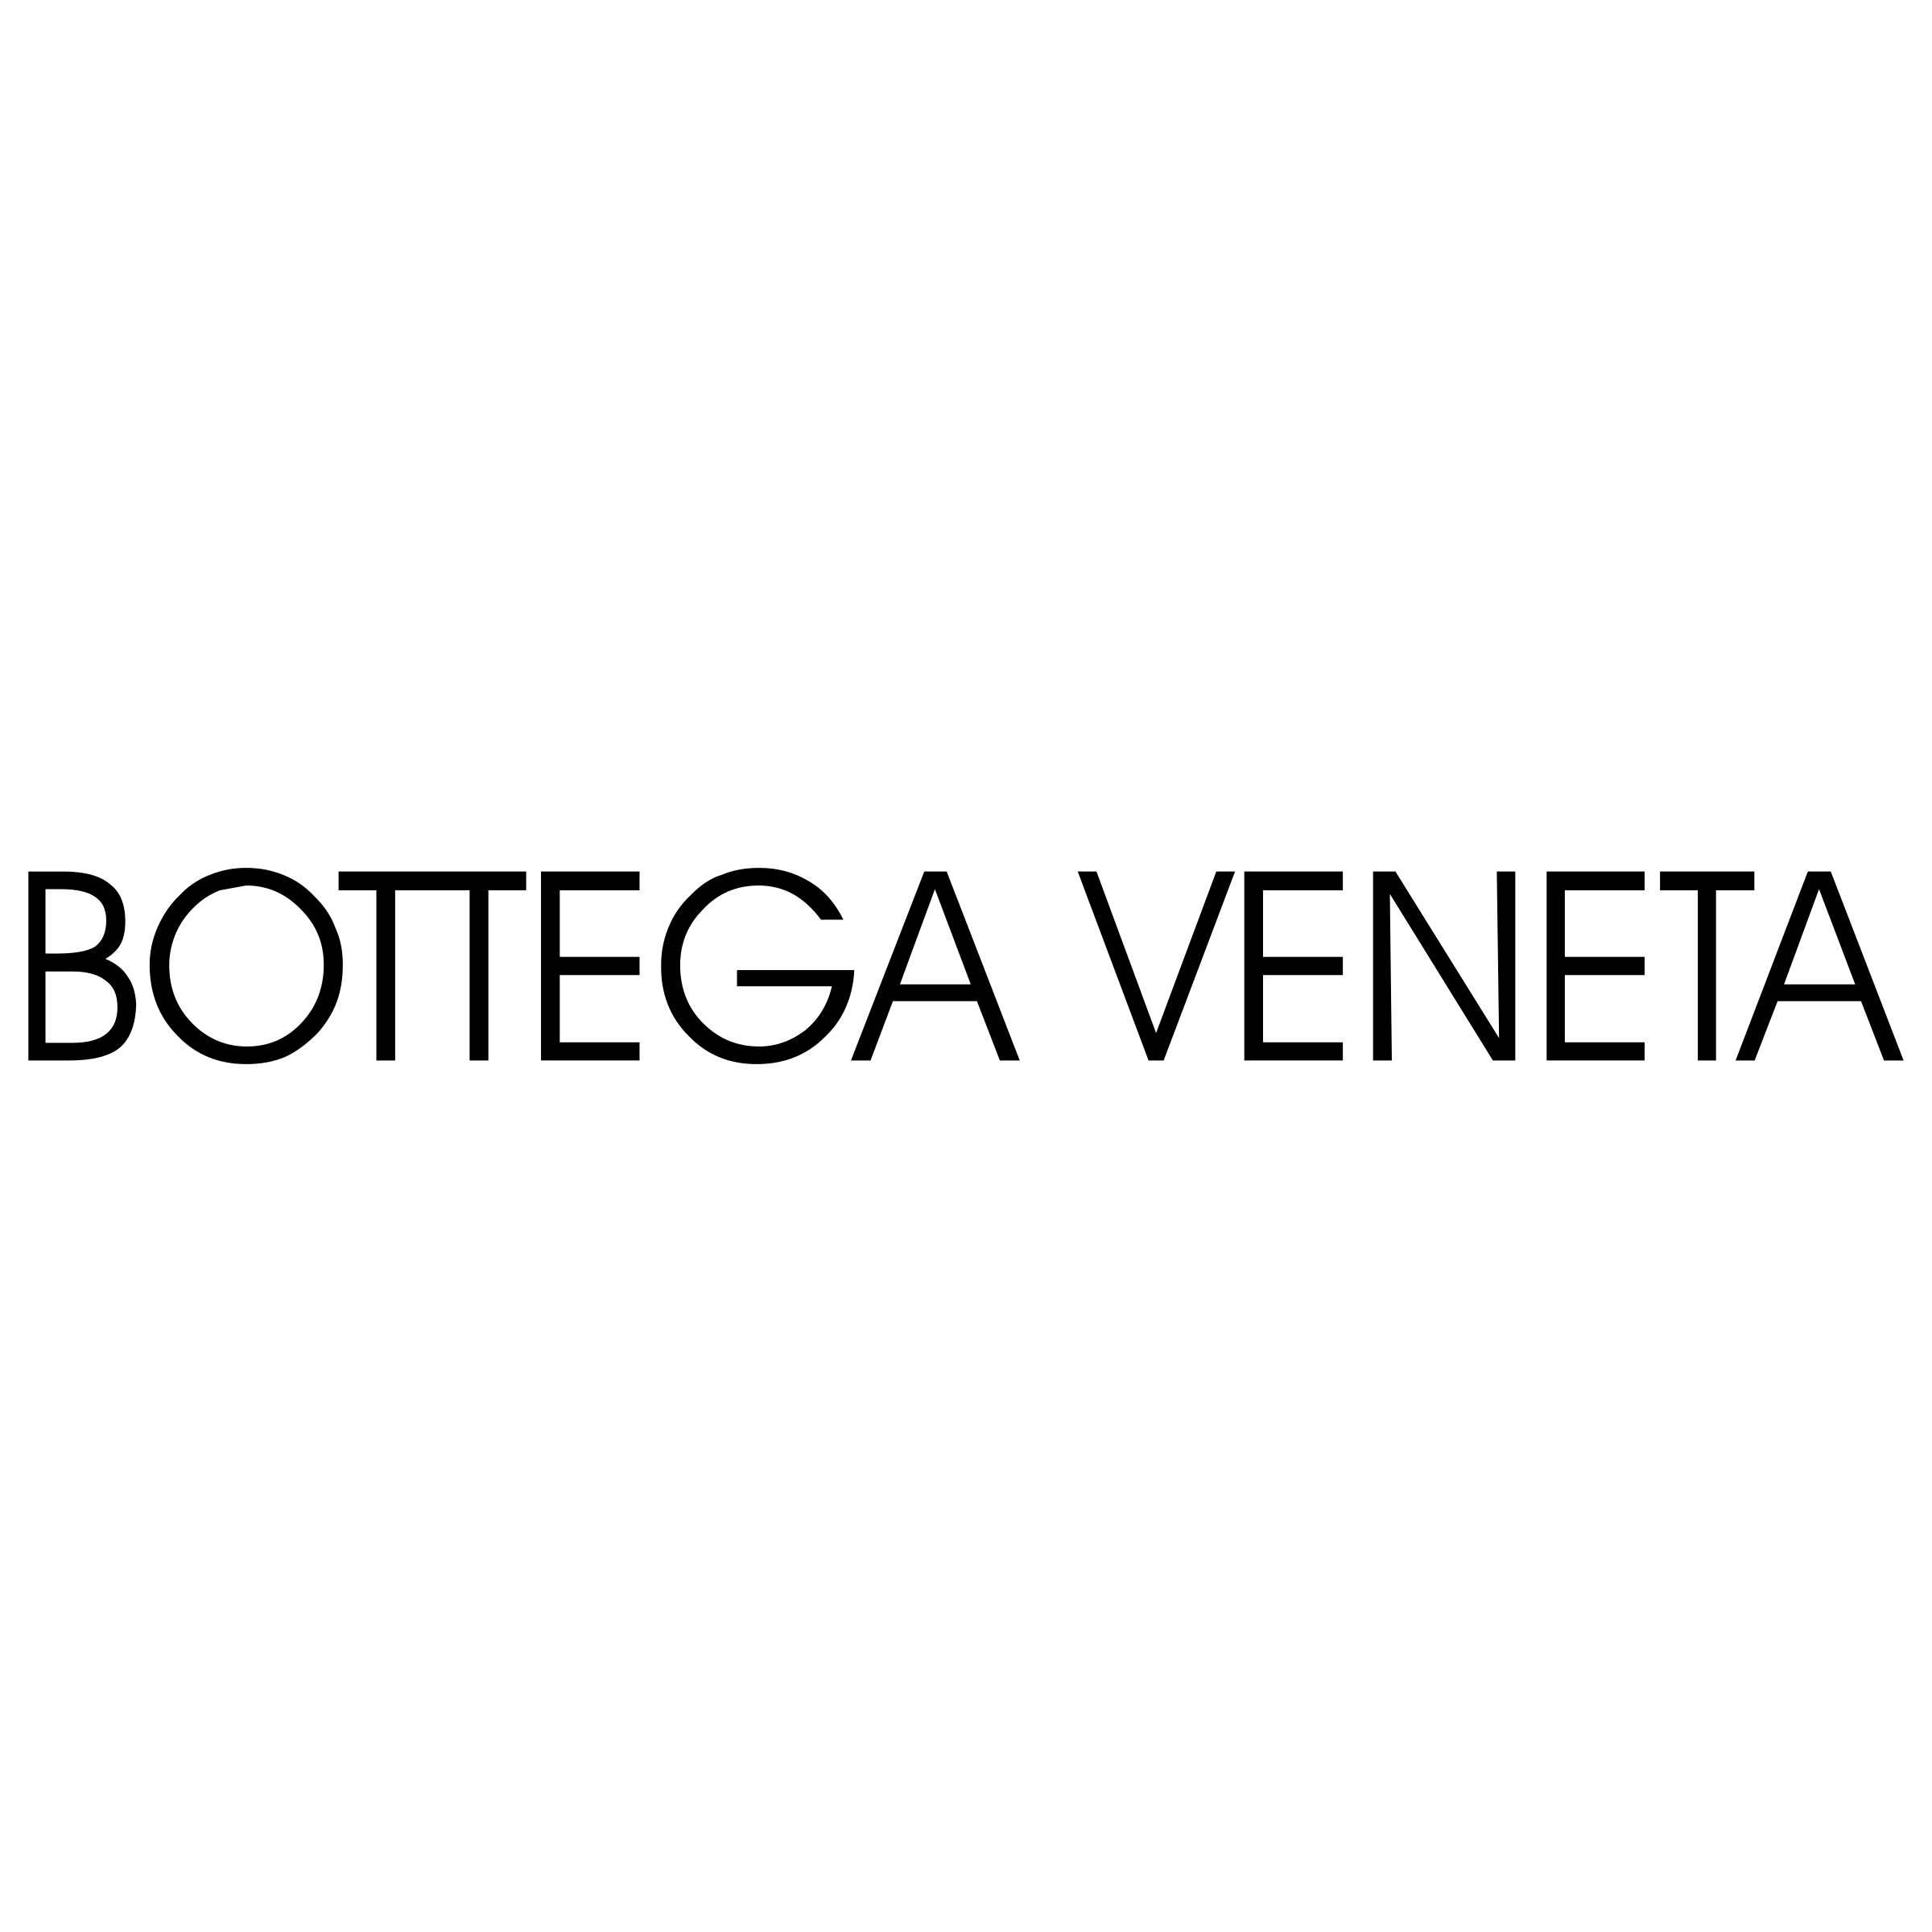 Bottega Veneta Logo - Bottega Veneta Logo PNG Transparent & SVG Vector